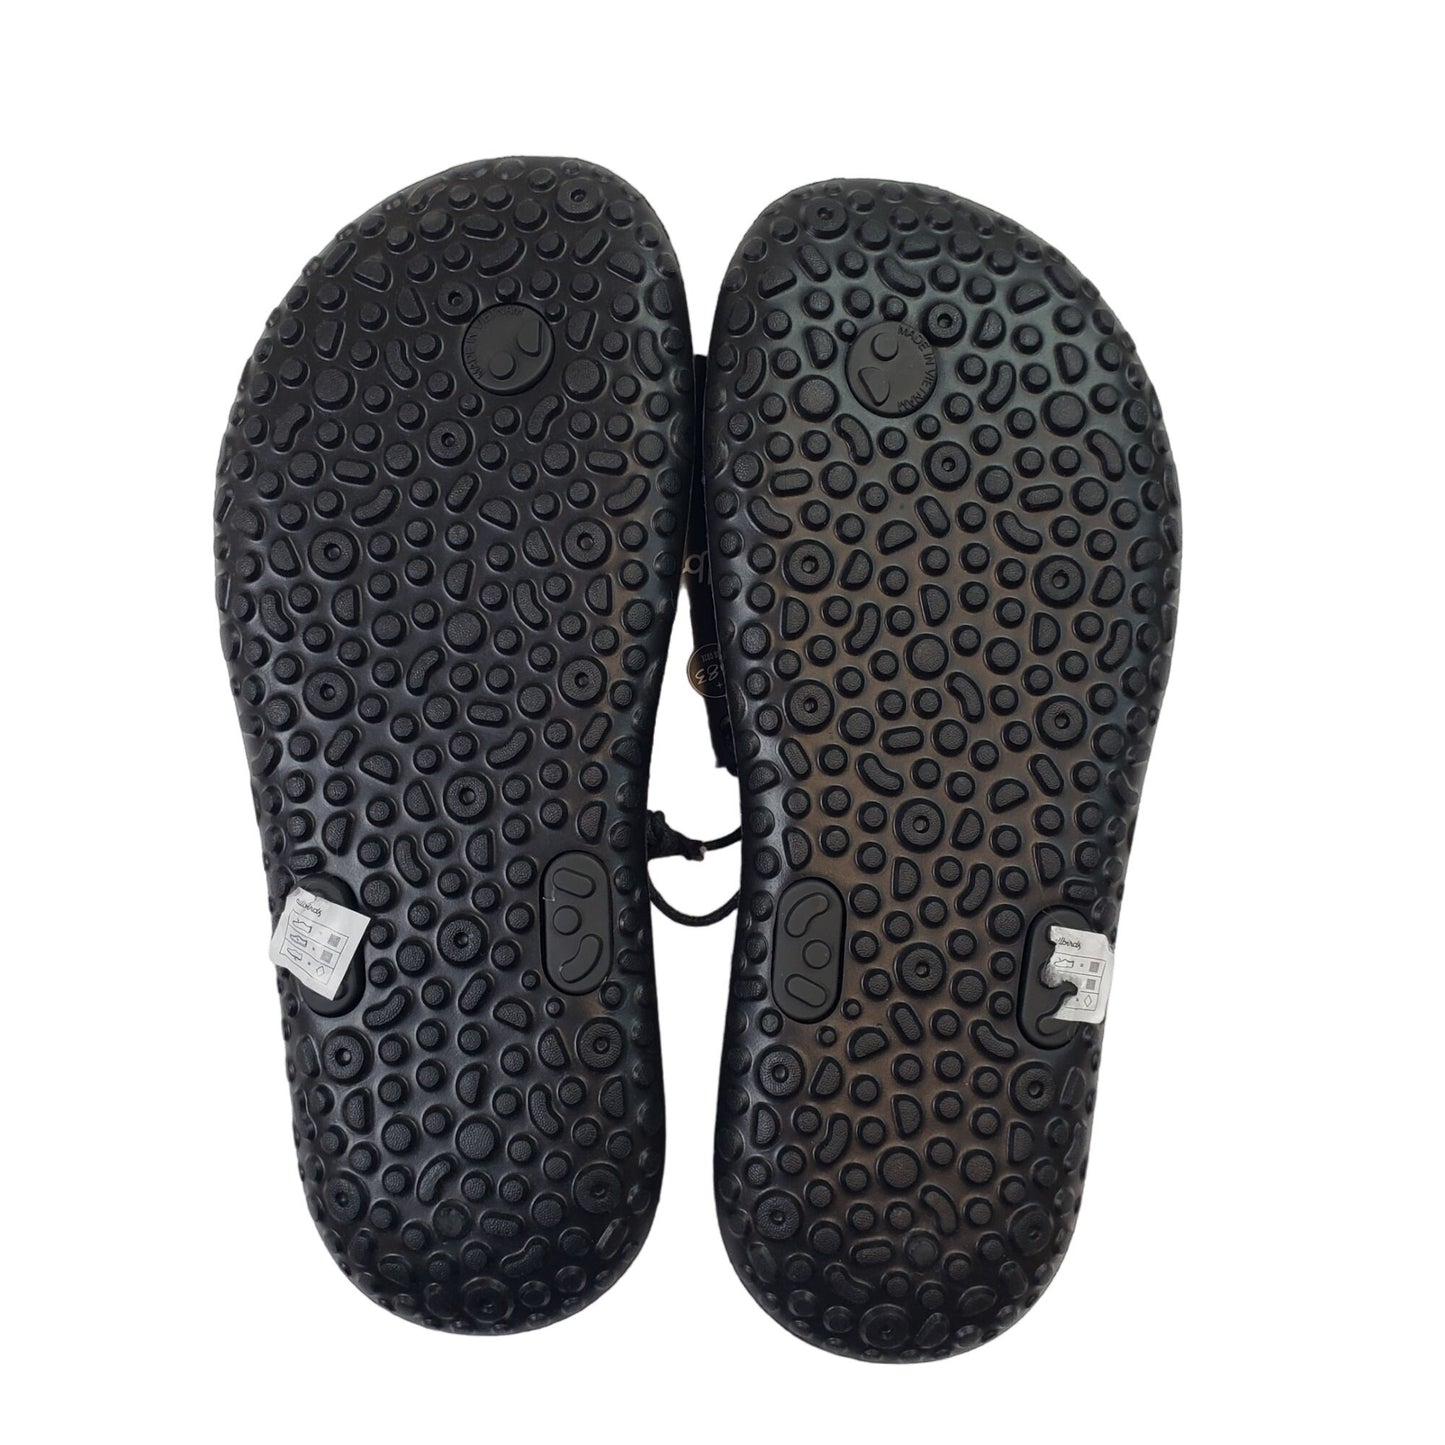 NWT Allbirds Unisex Sugar Zeffer Thong Sandals Size W8/M6